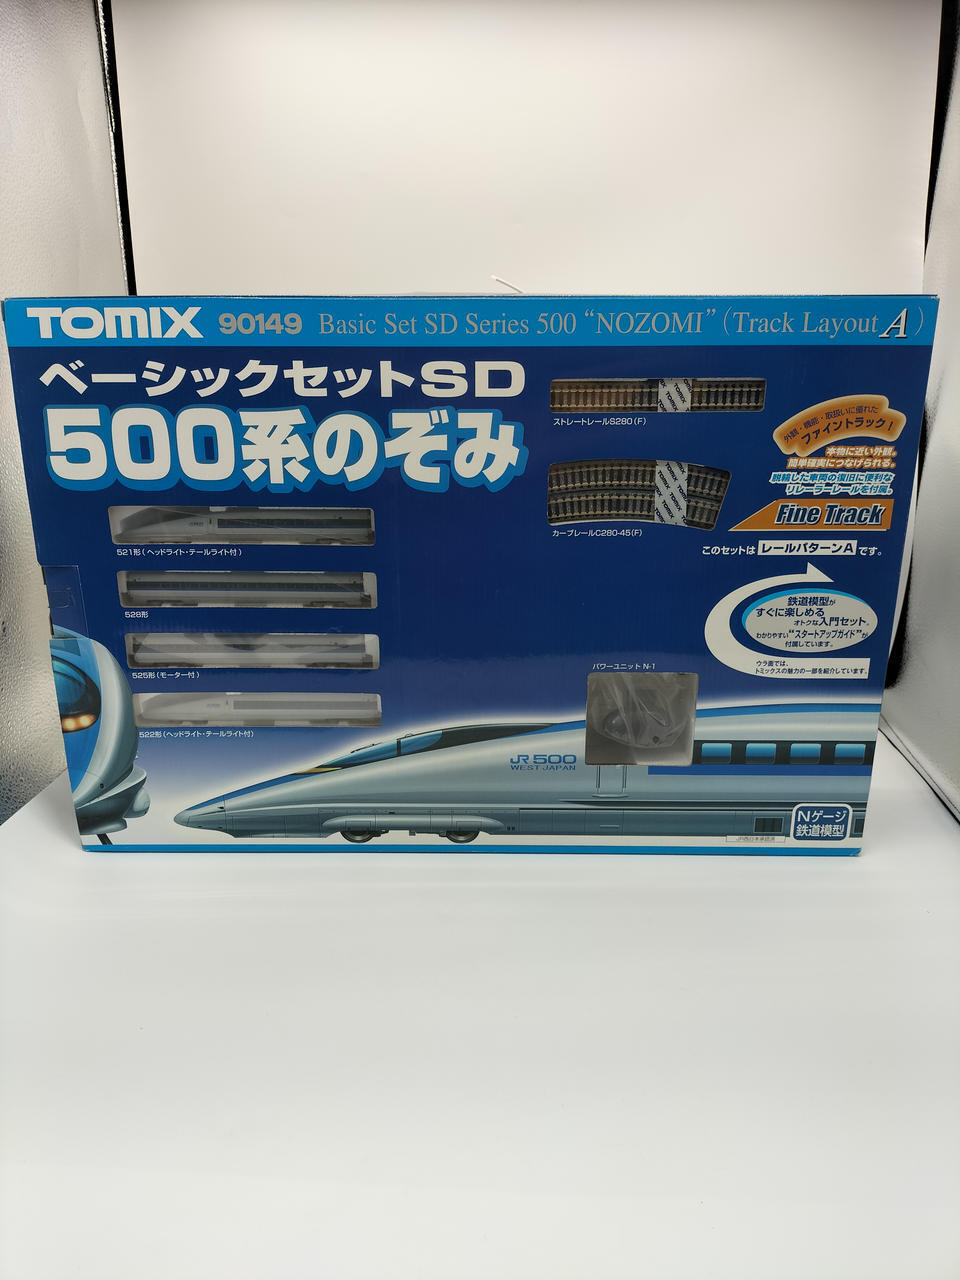 Tomix N700 Series Nozomi T Rail Pattern A N Gauge Basic Set Sd